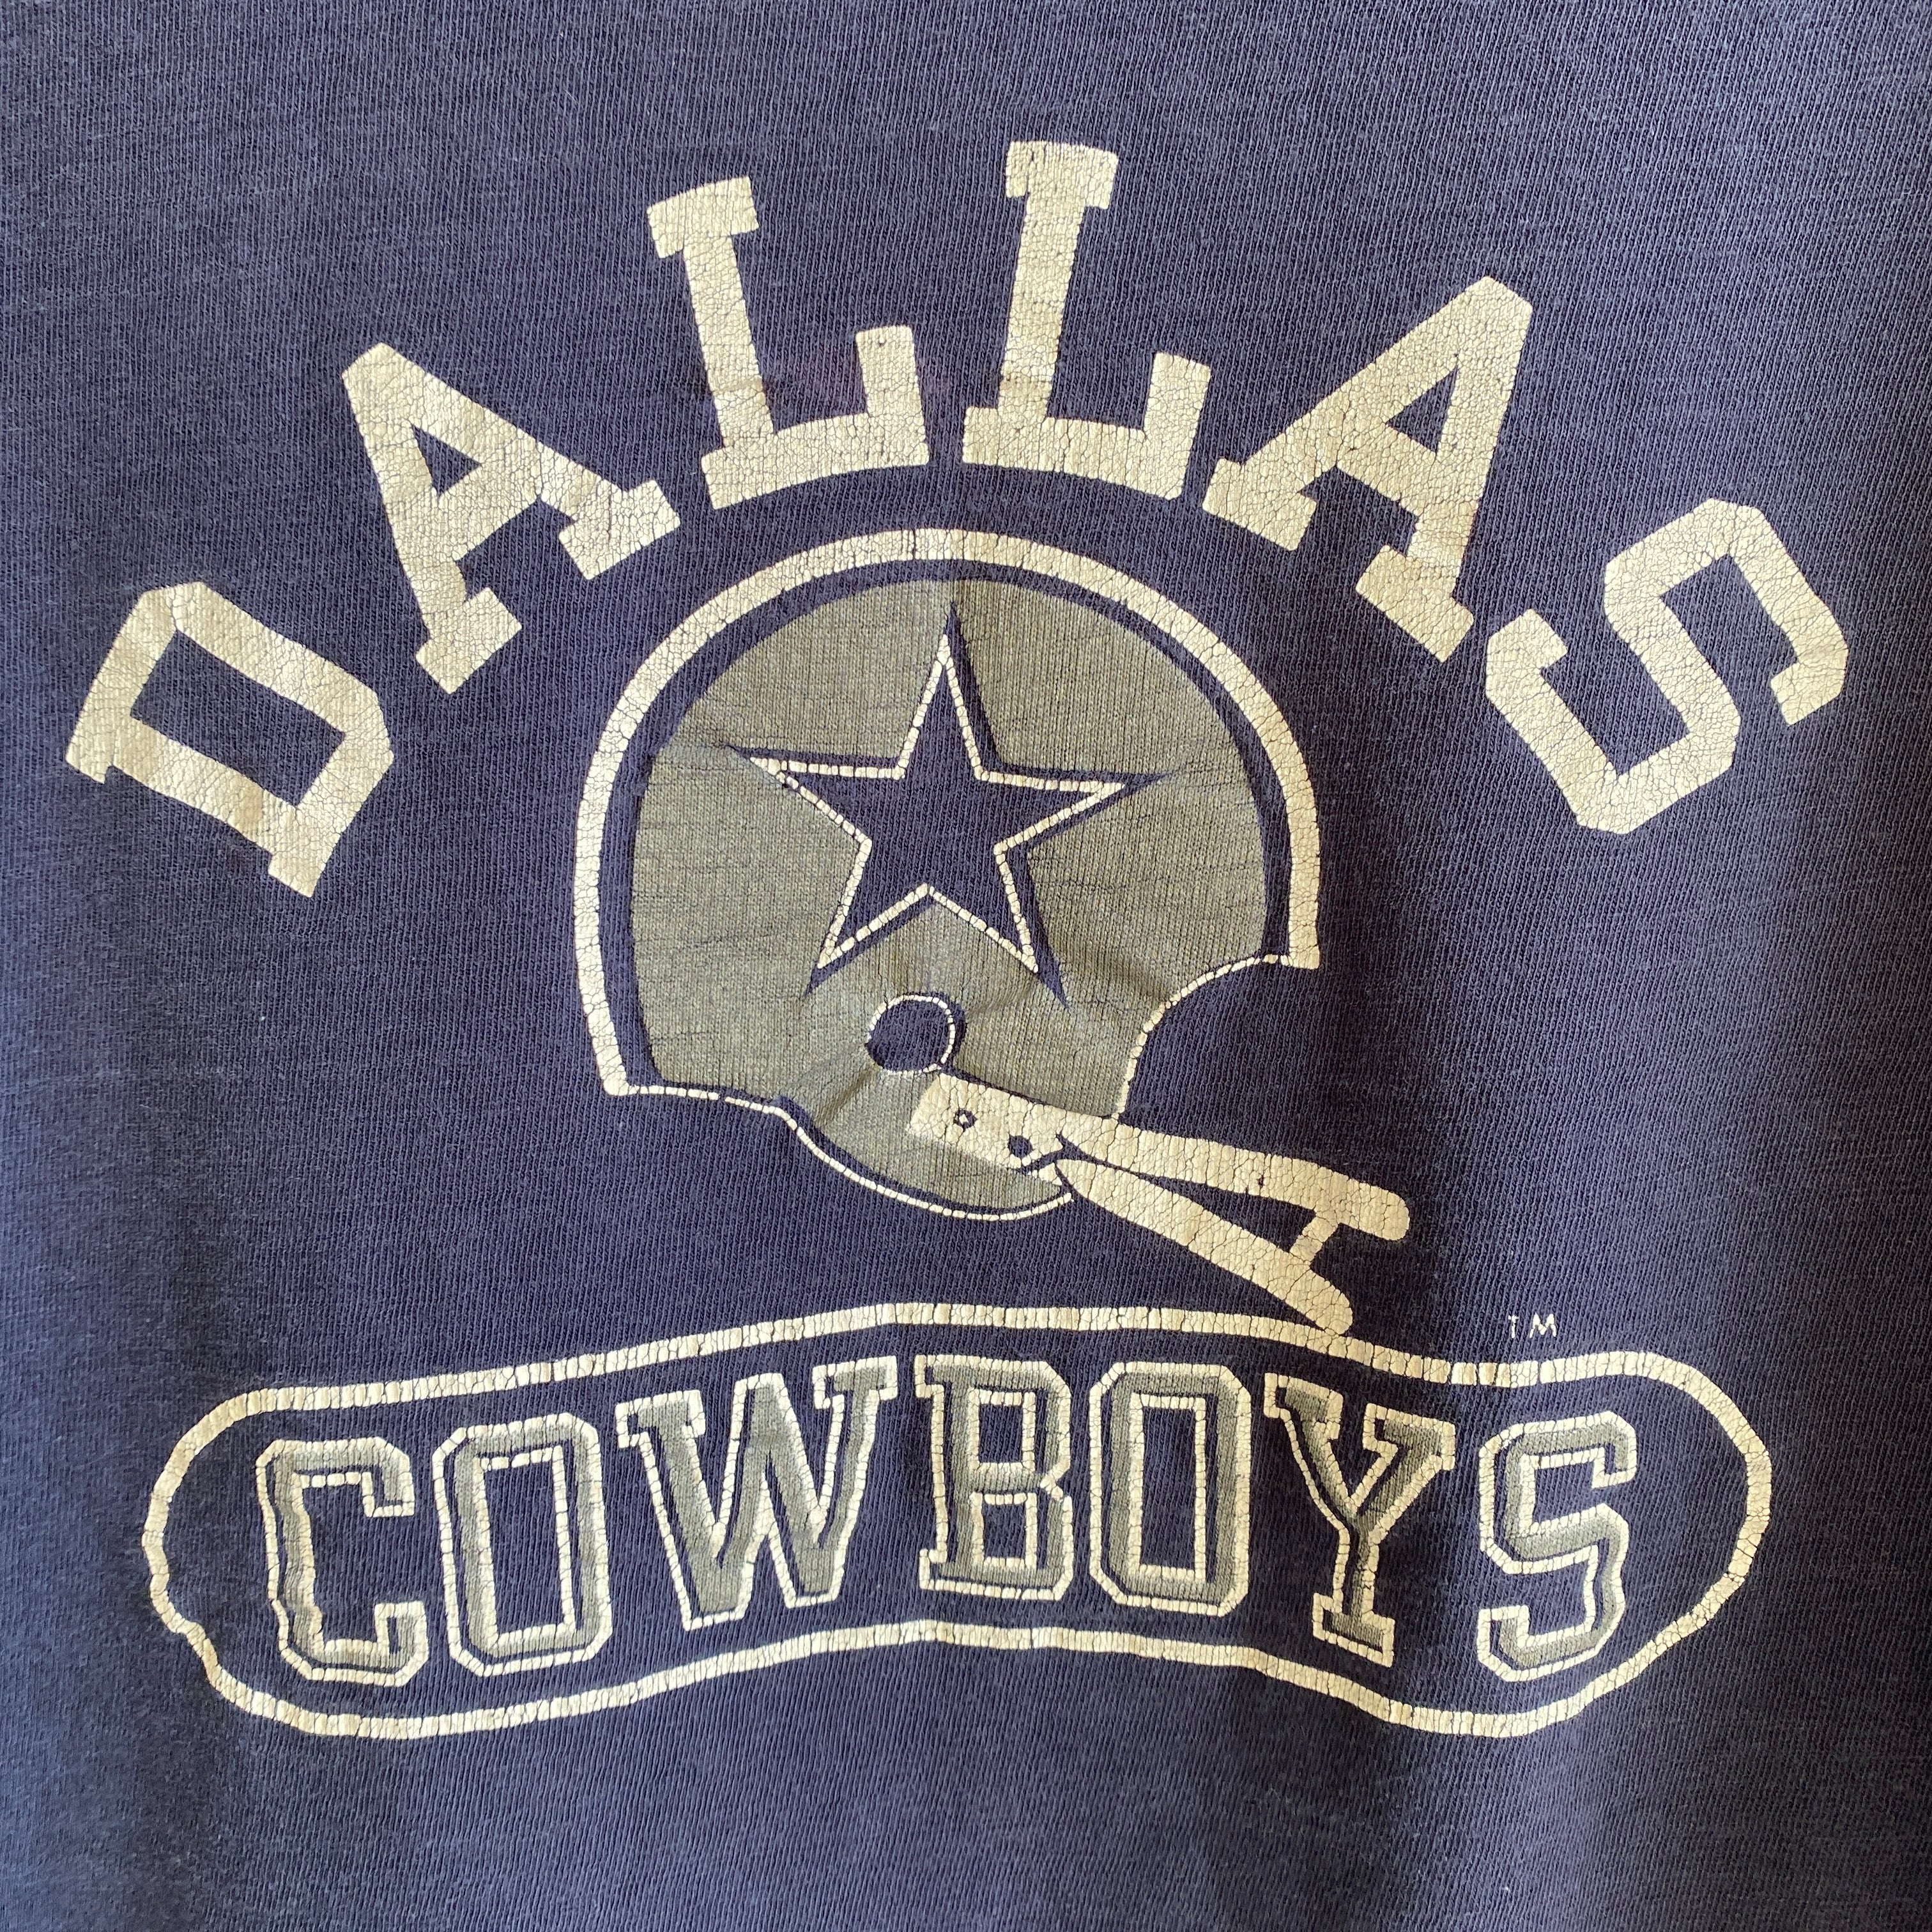 1970s Champion Blue Bar Dallas Cowboys Thrashed Cotton T-Shirt